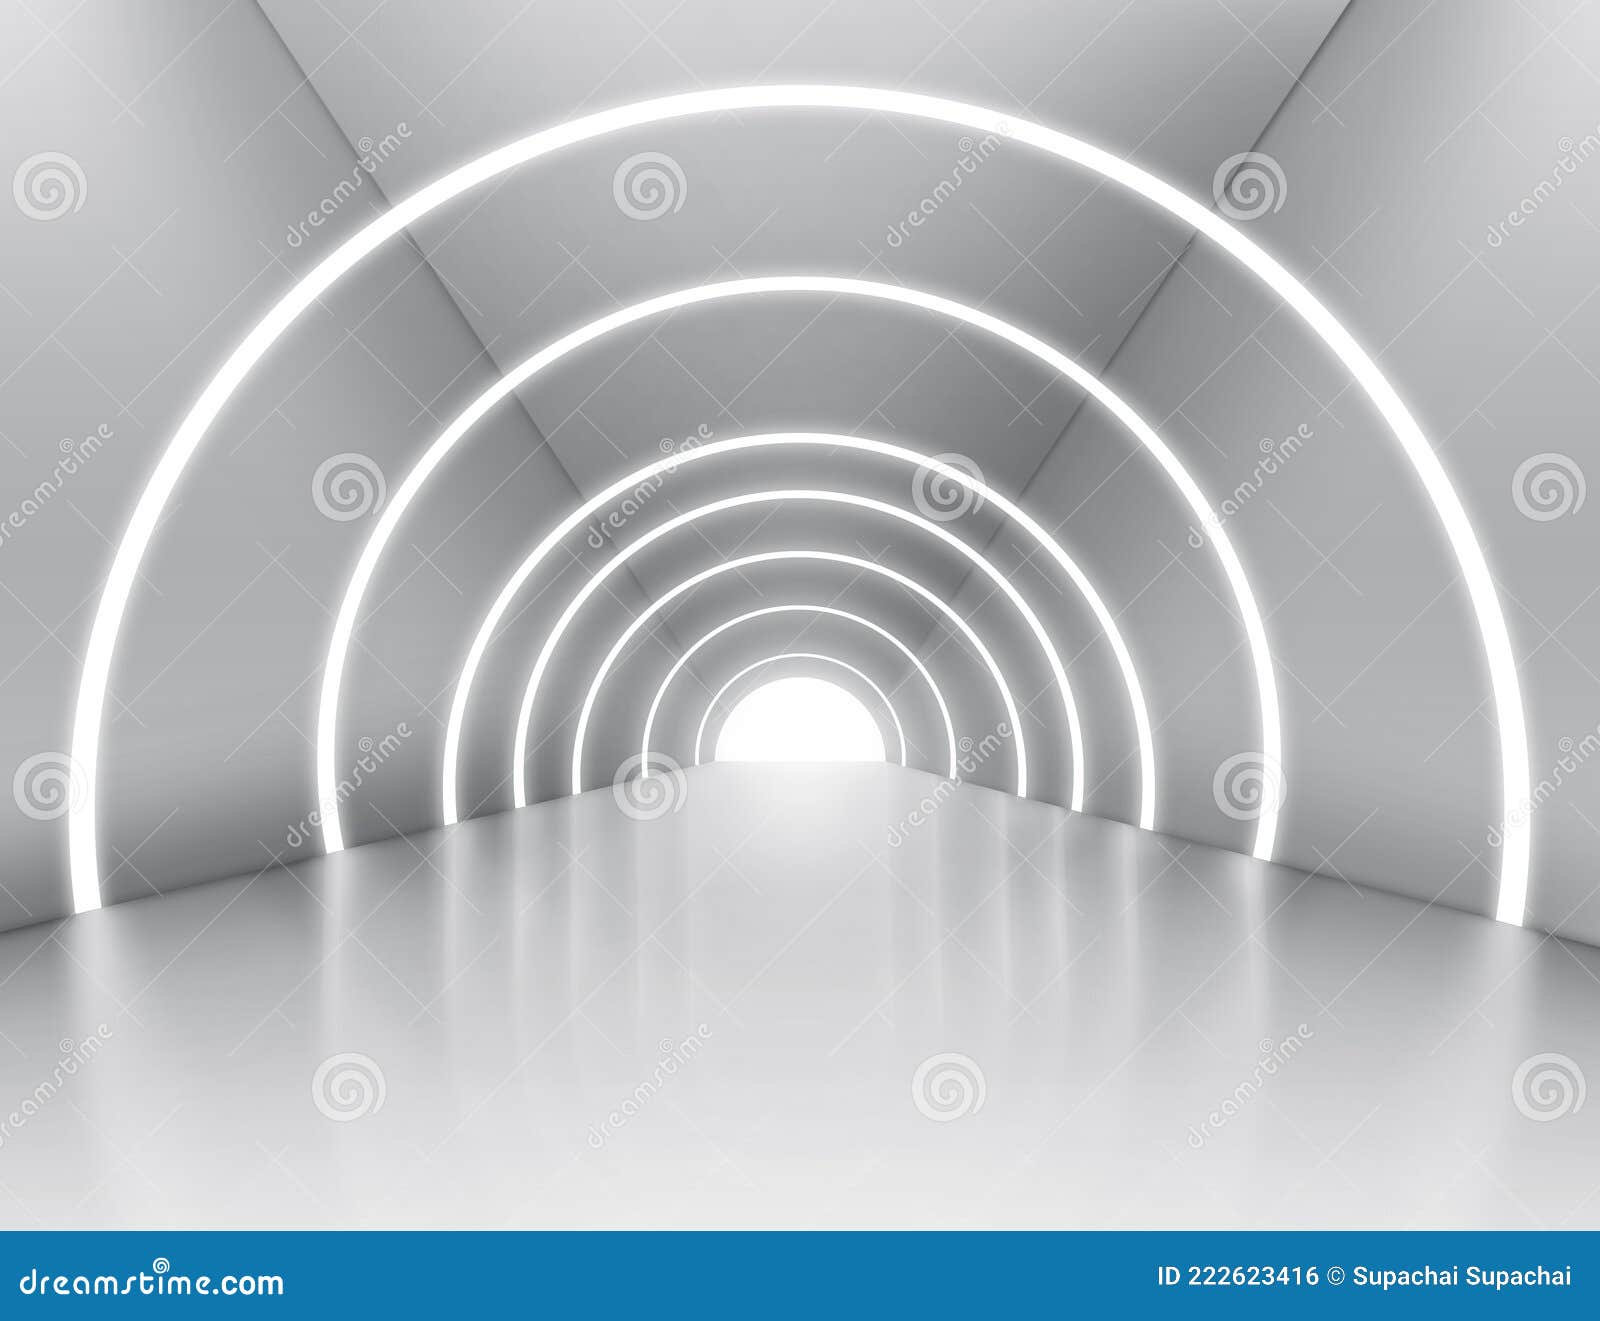 Illuminated Corridor Interior Design. 3D Rendering Stock Illustration ...